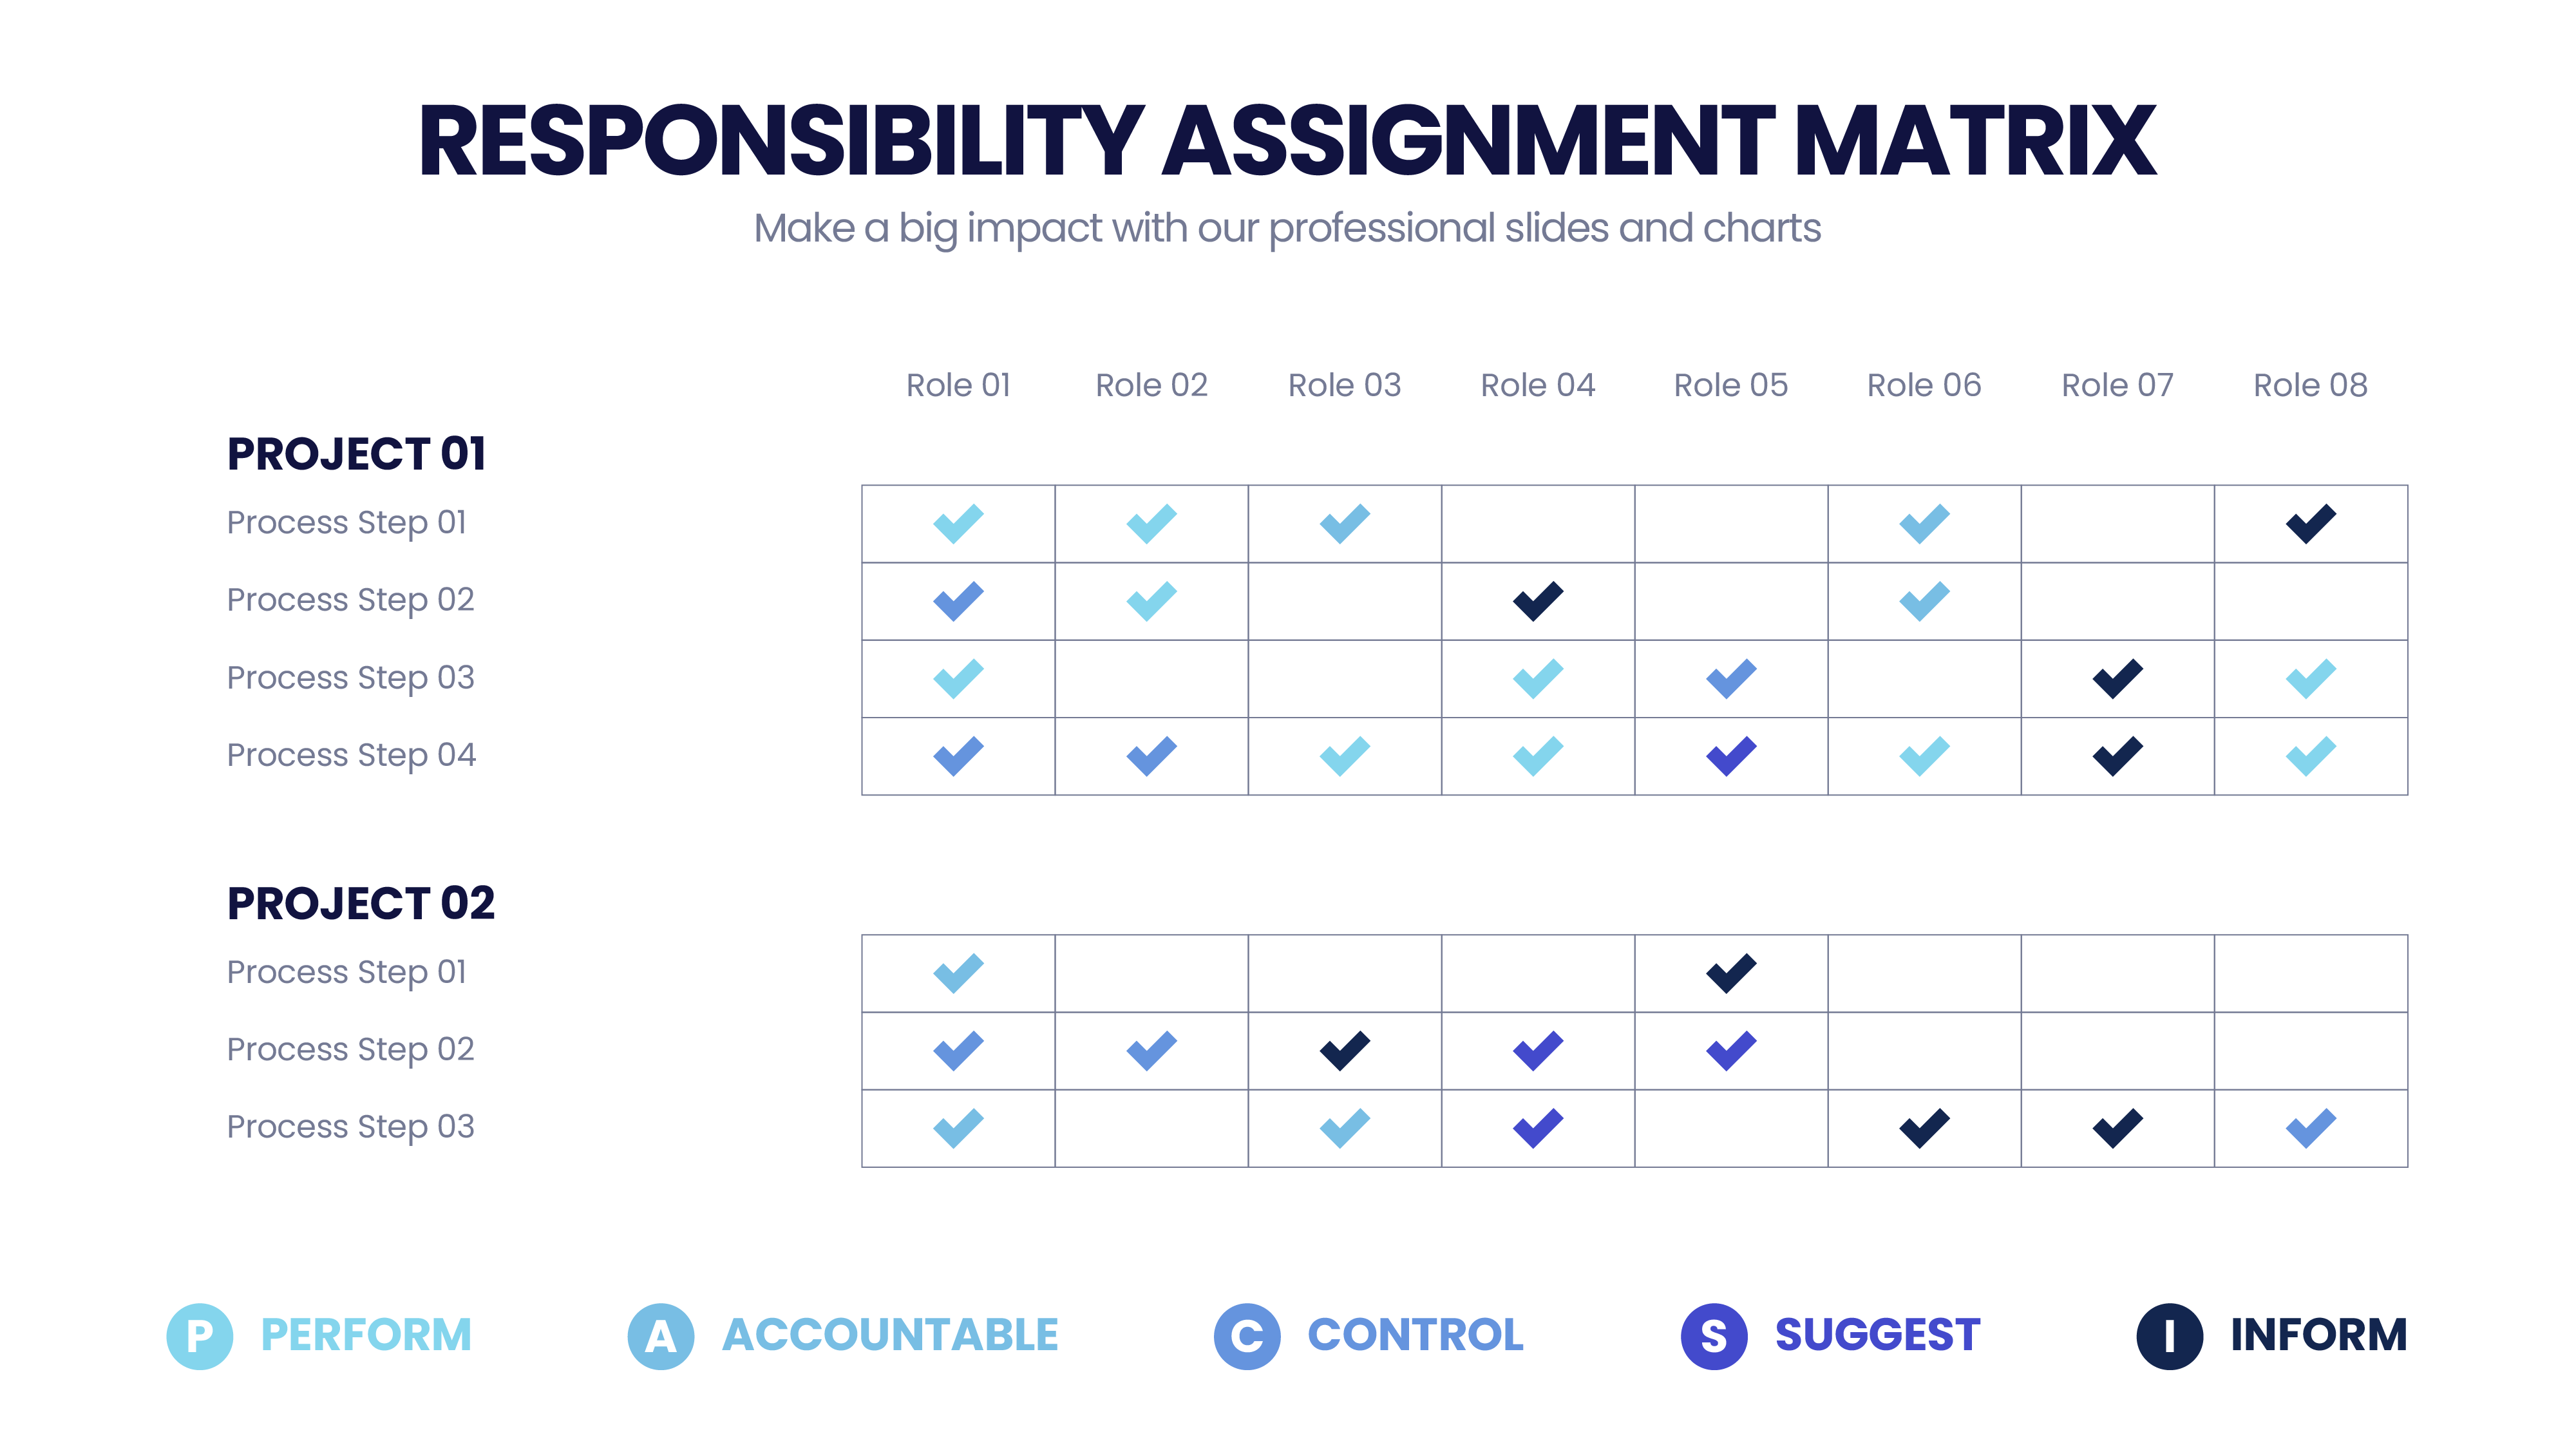 a responsibility assignment matrix is